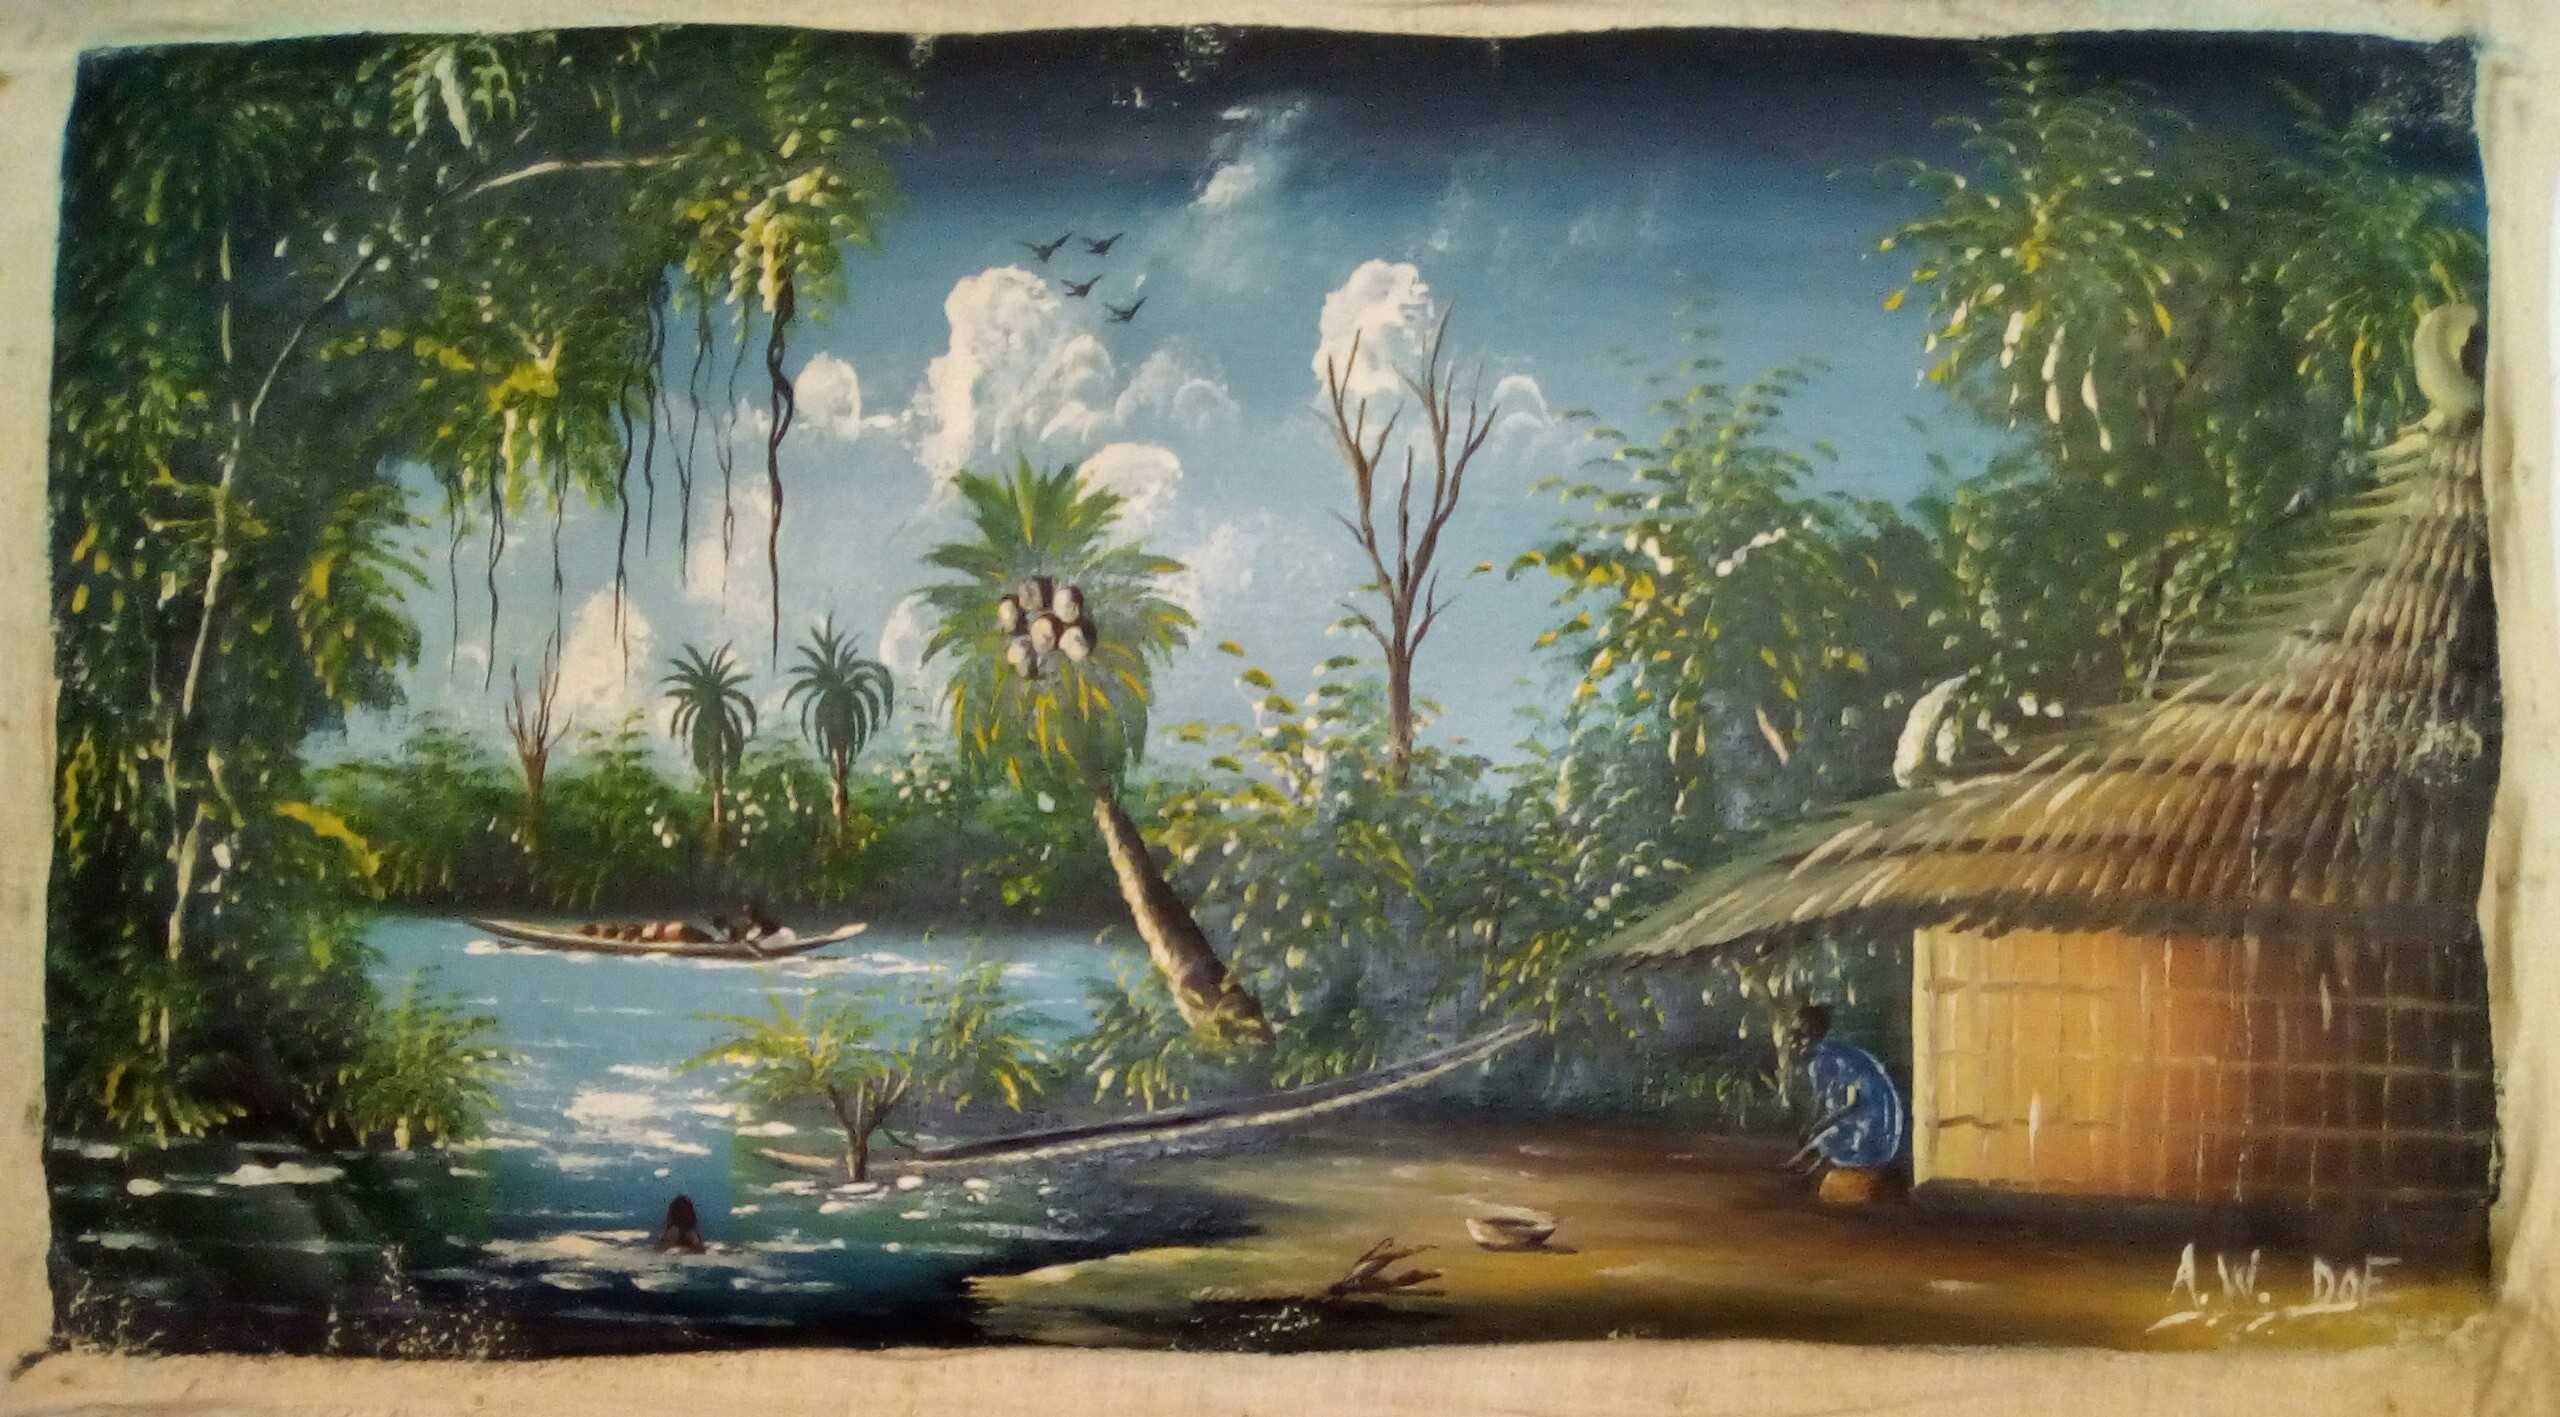 A.W.DOE / Africa -tablou/pictura in ulei,unicat facut de mana/handmade